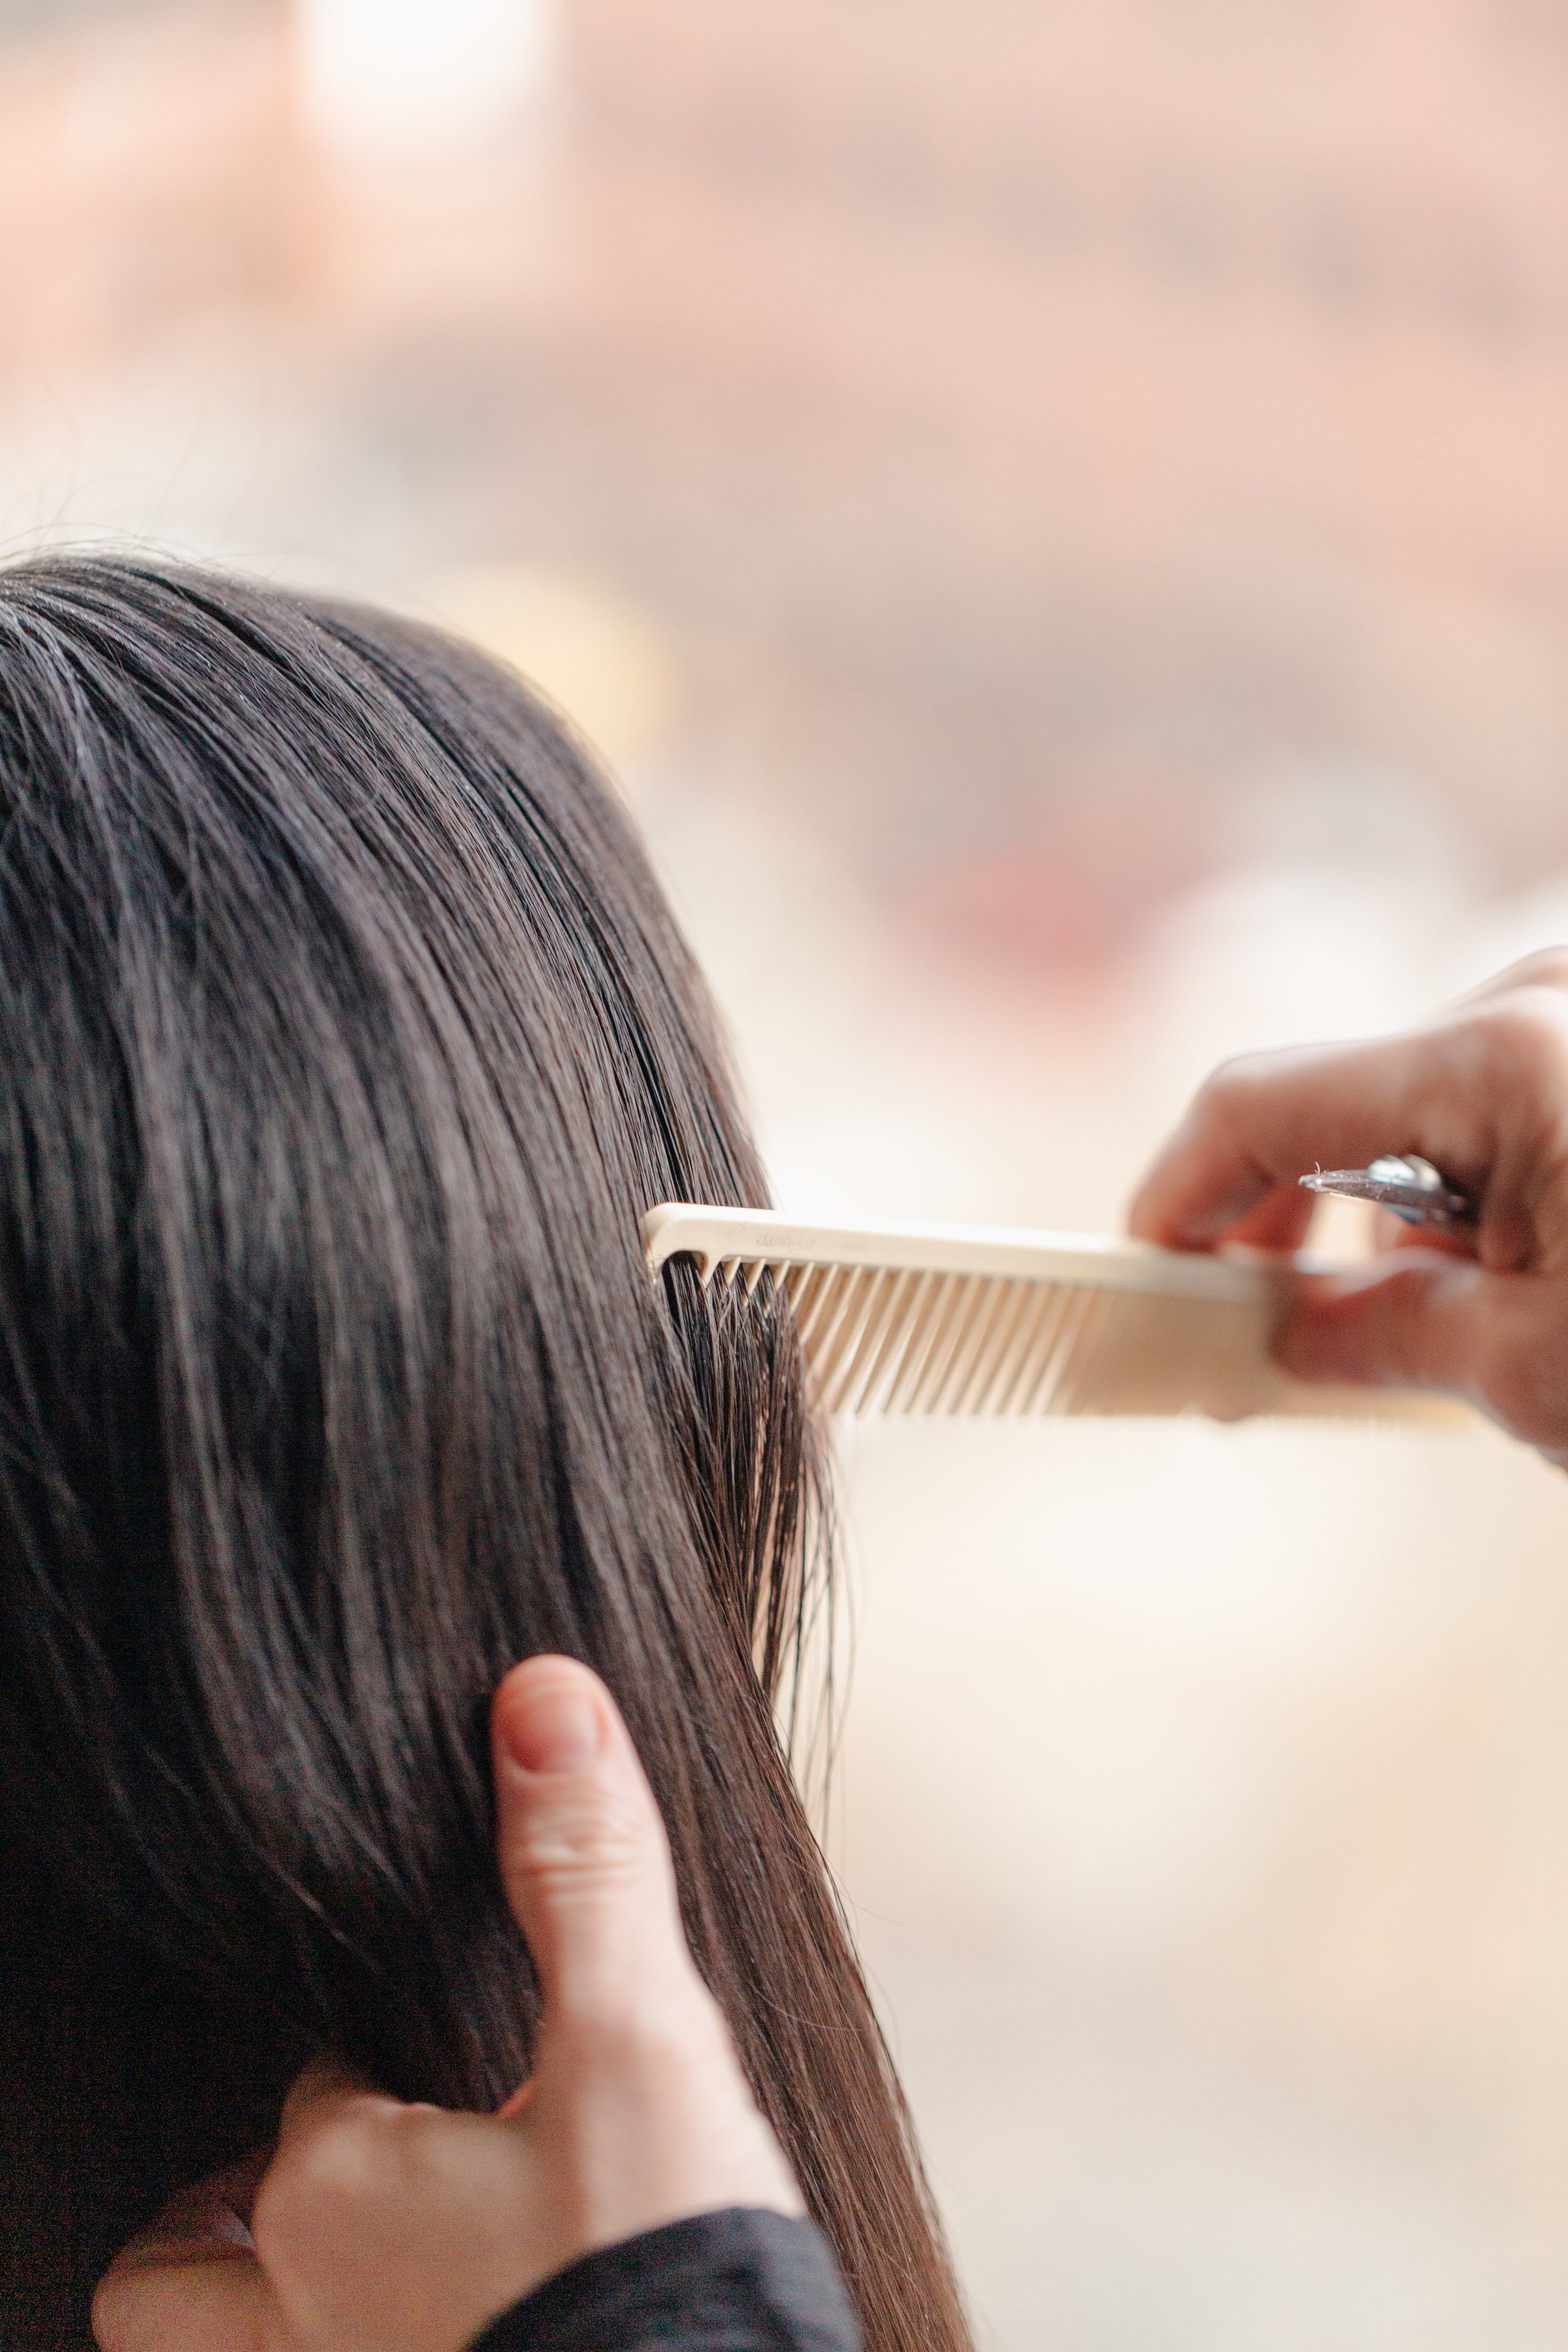 Hair stylist combing long, brown hair.